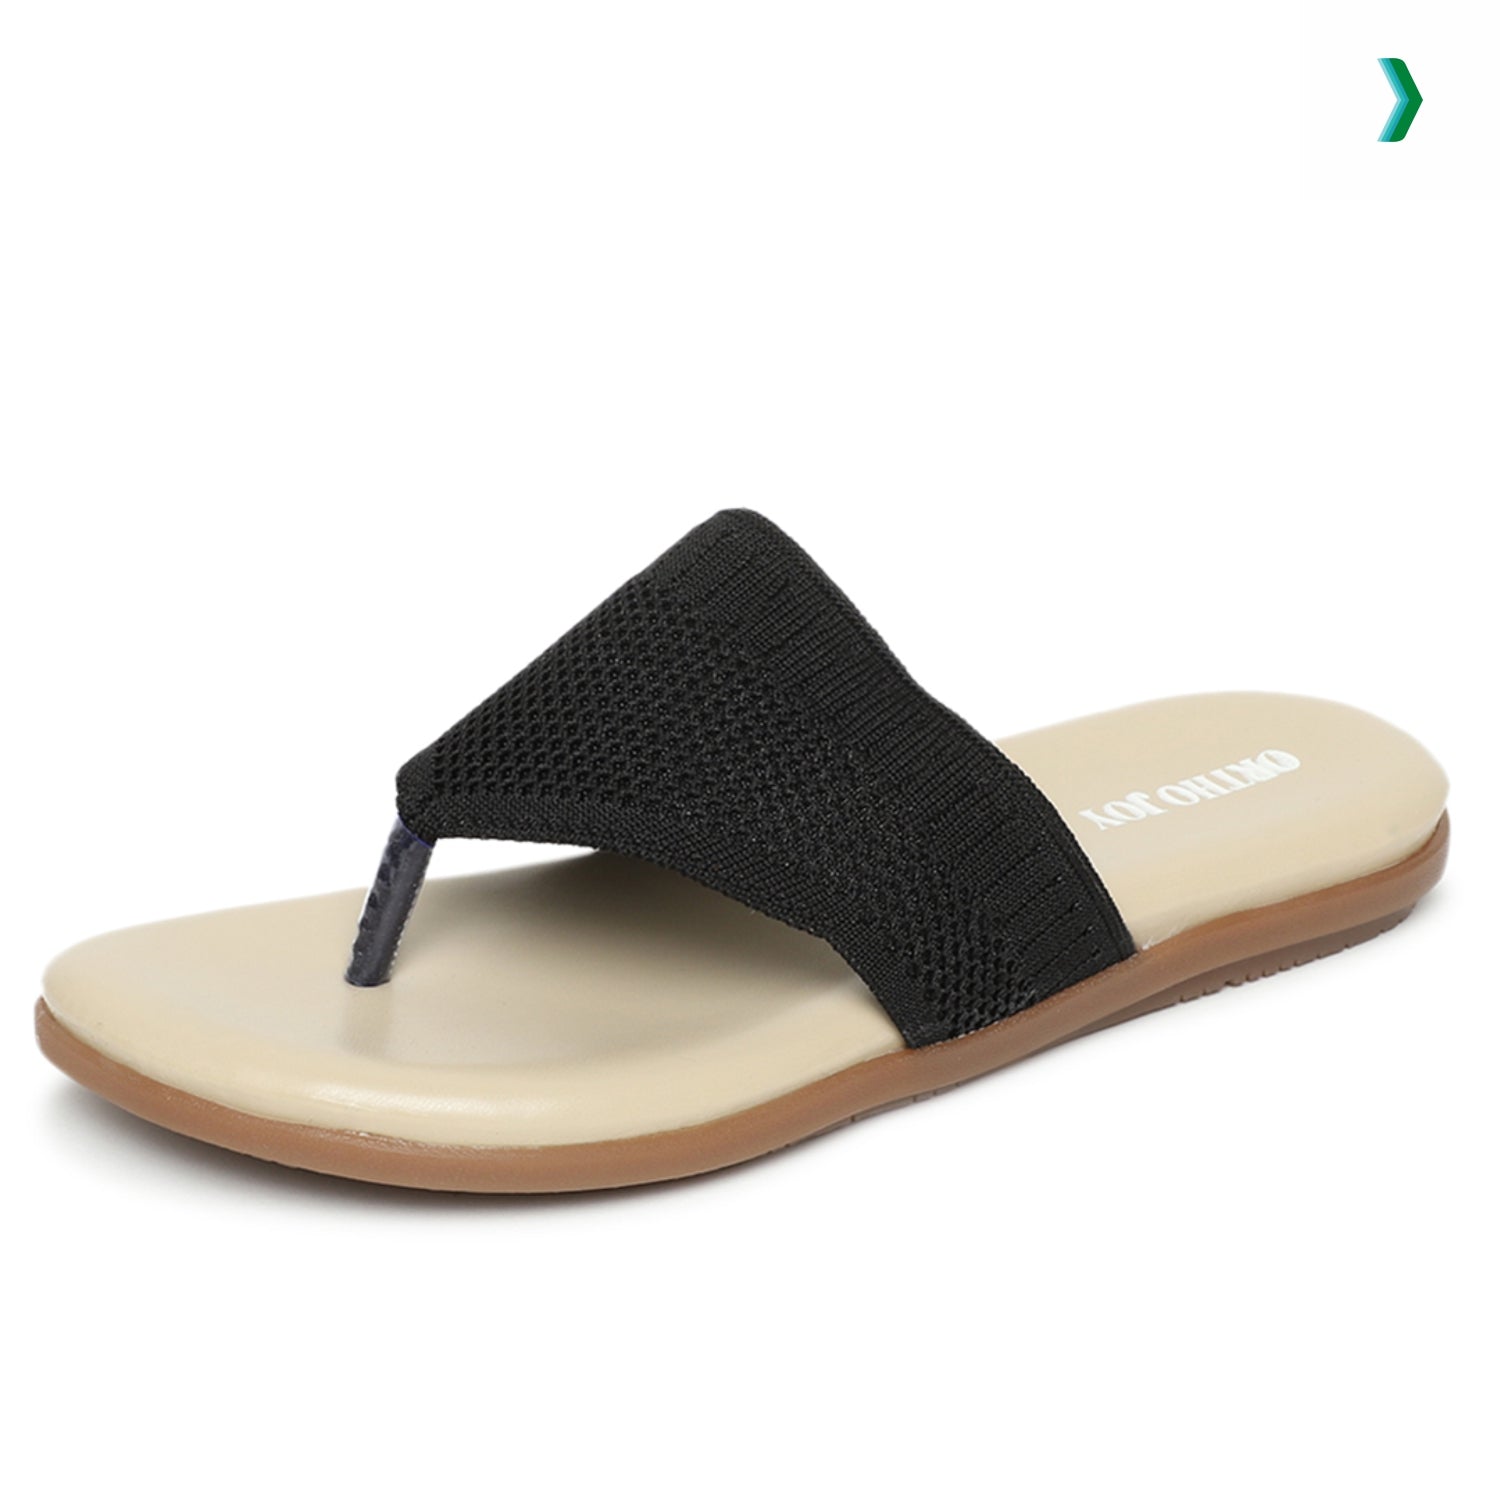 ORTHO JOY Fancy Comfortable flat sandals for women - 36 / Black